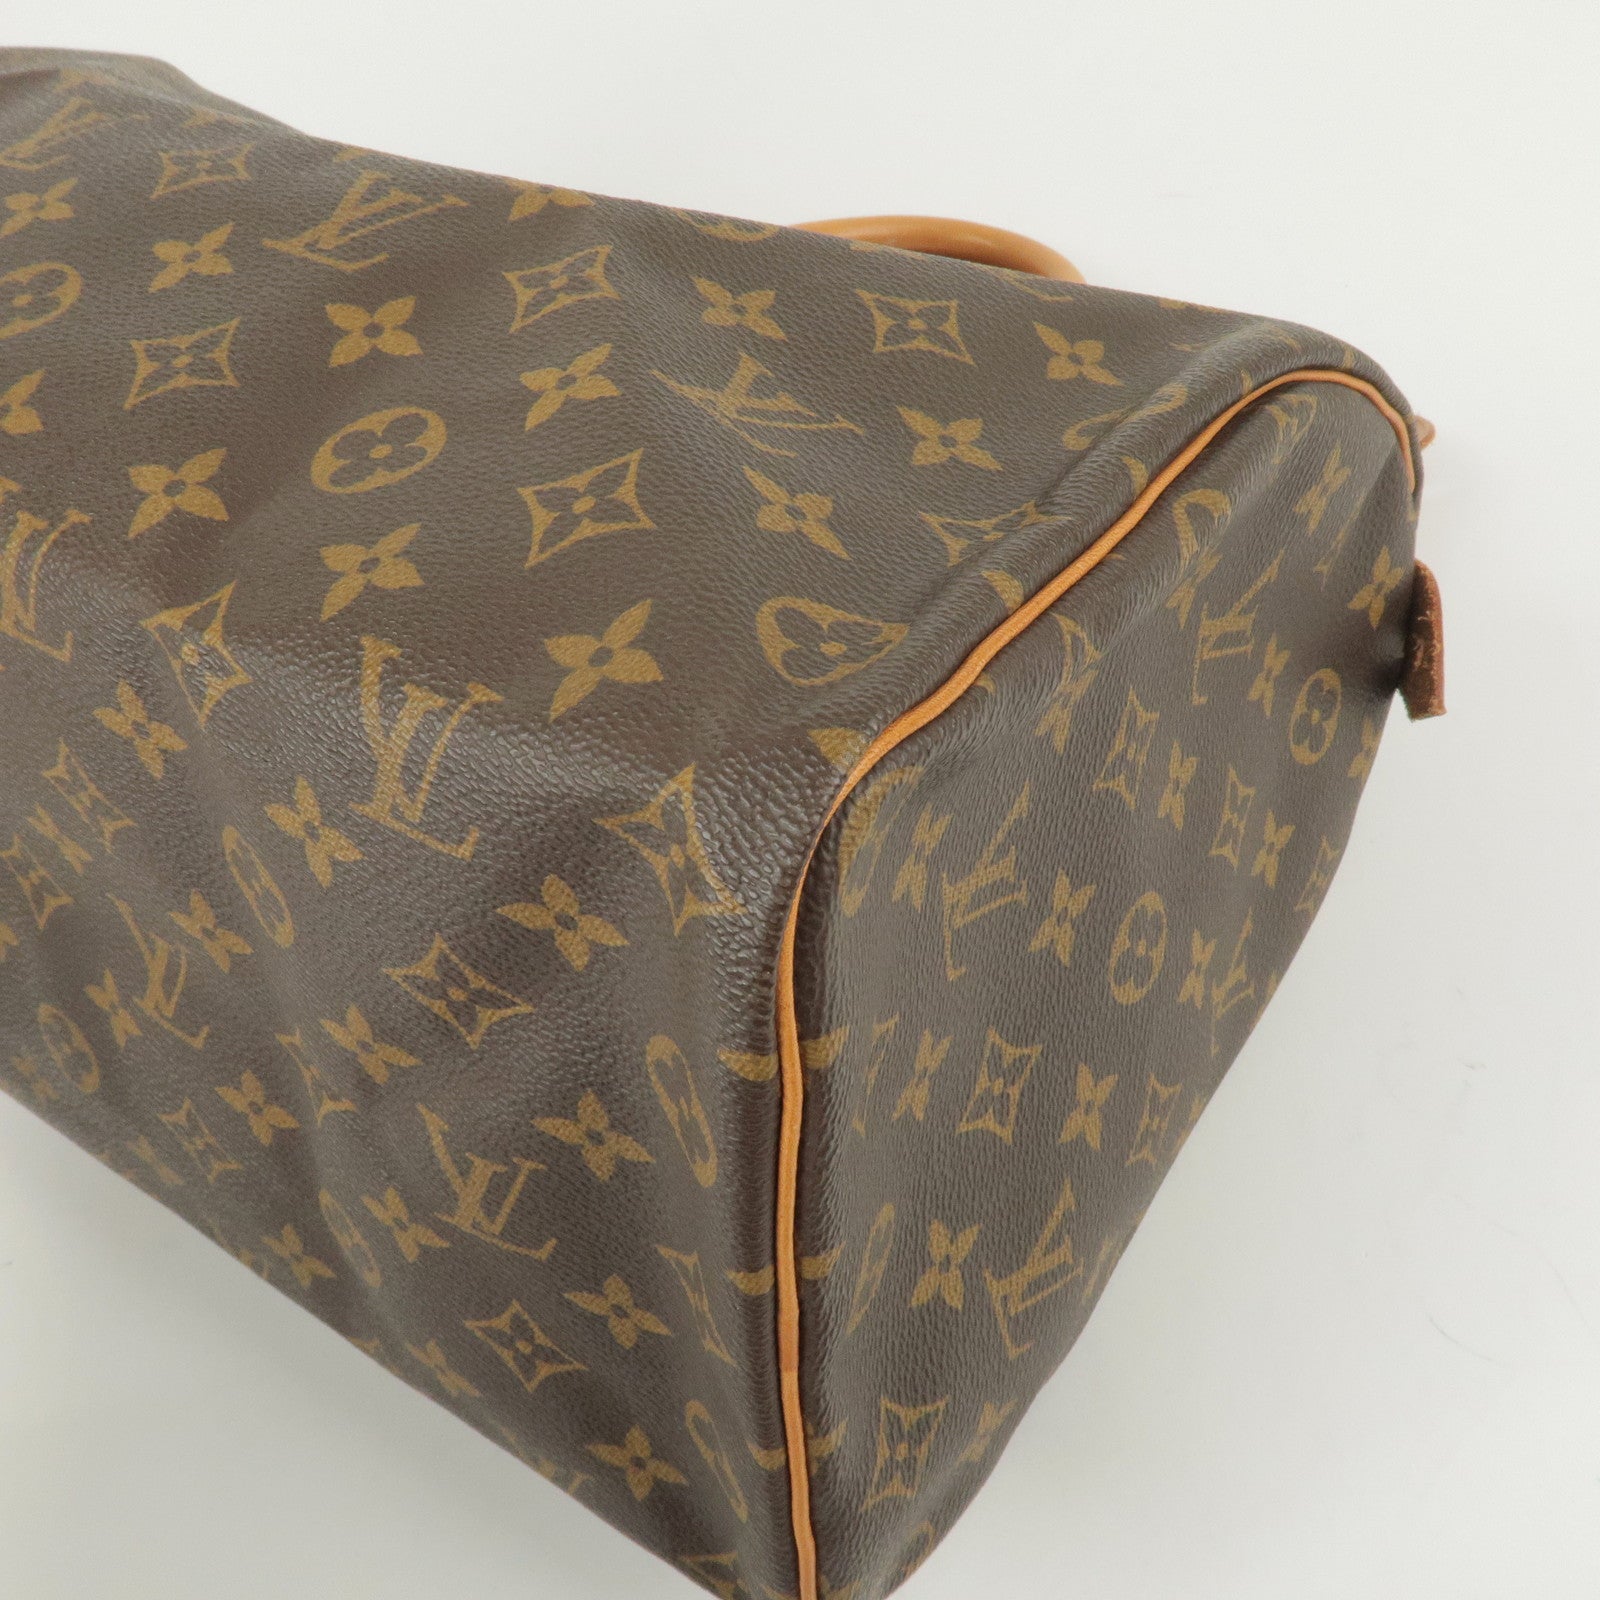 Authentic Vintage Louis Vuitton Monogram Speedy 35 Satchel Boston Bag